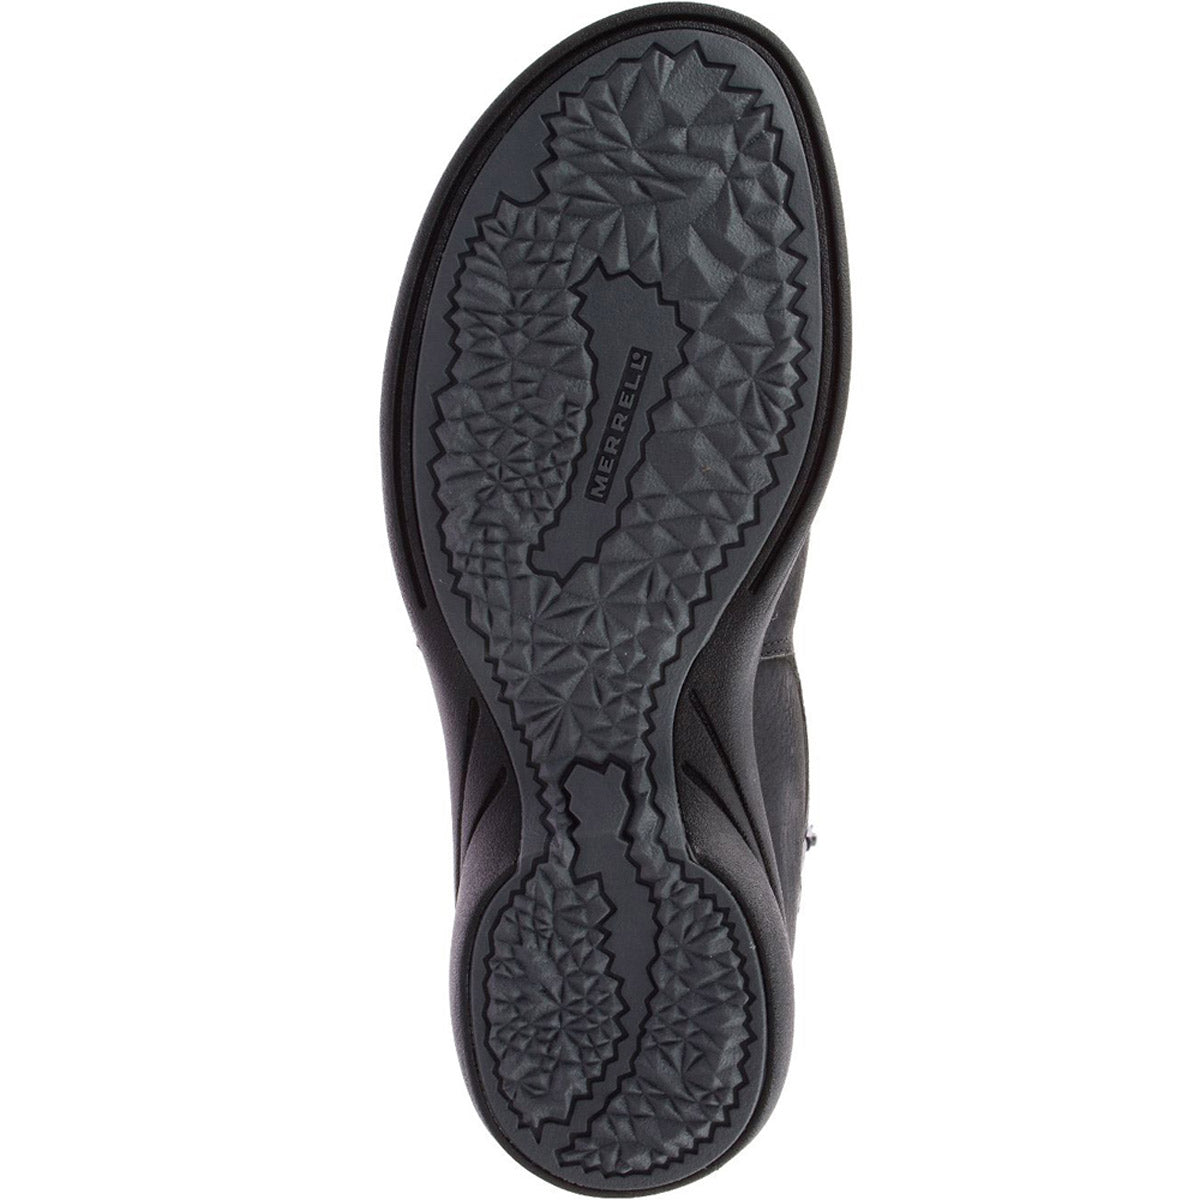 Tread pattern of a Merrell Andover Peak Black - Womens shoe sole.